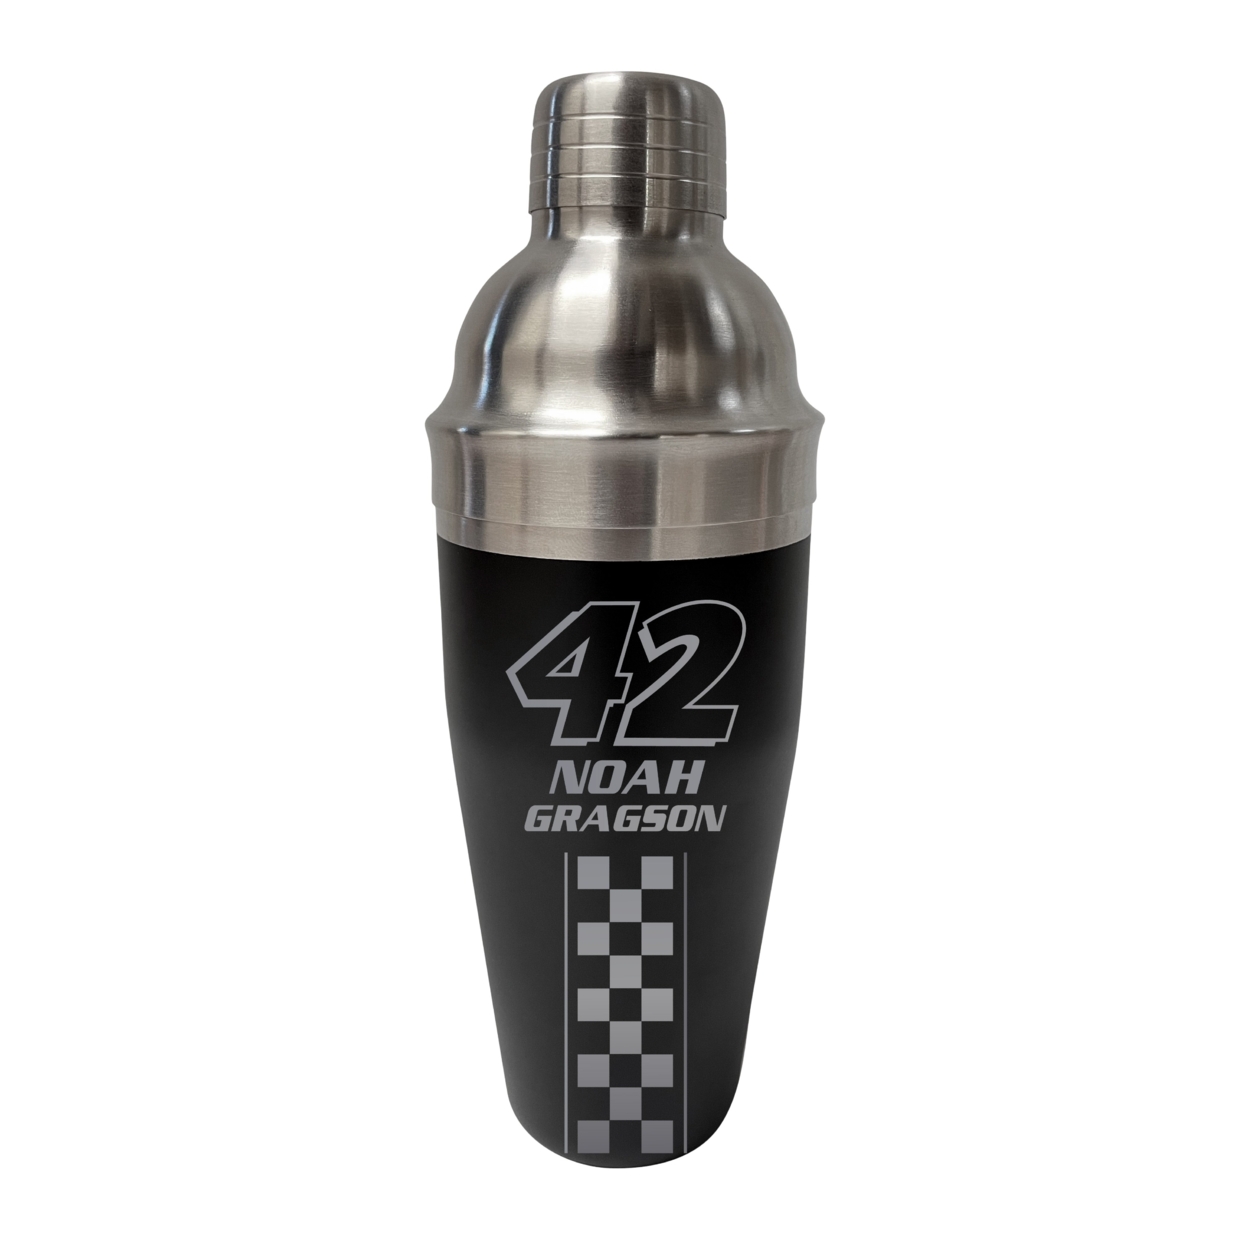 #42 Noah Gragson NASCAR Officially Licensed Cocktail Shaker